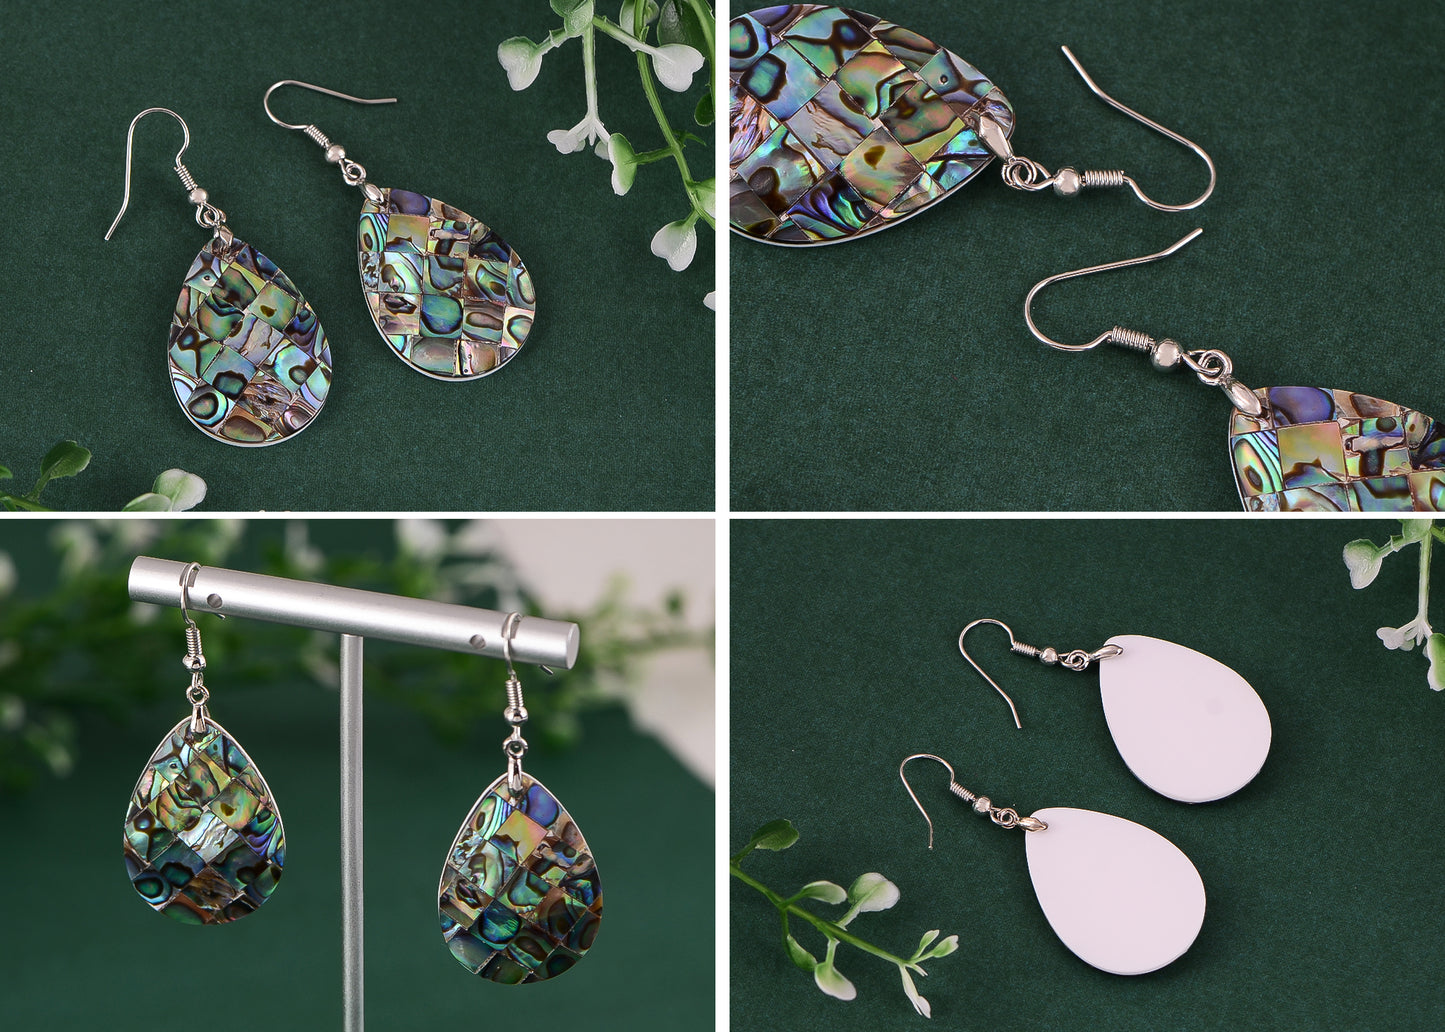 Alilang Mosaic Harmony Natural Abalone Shell Handmade Dangle Earrings Shell Jewelry